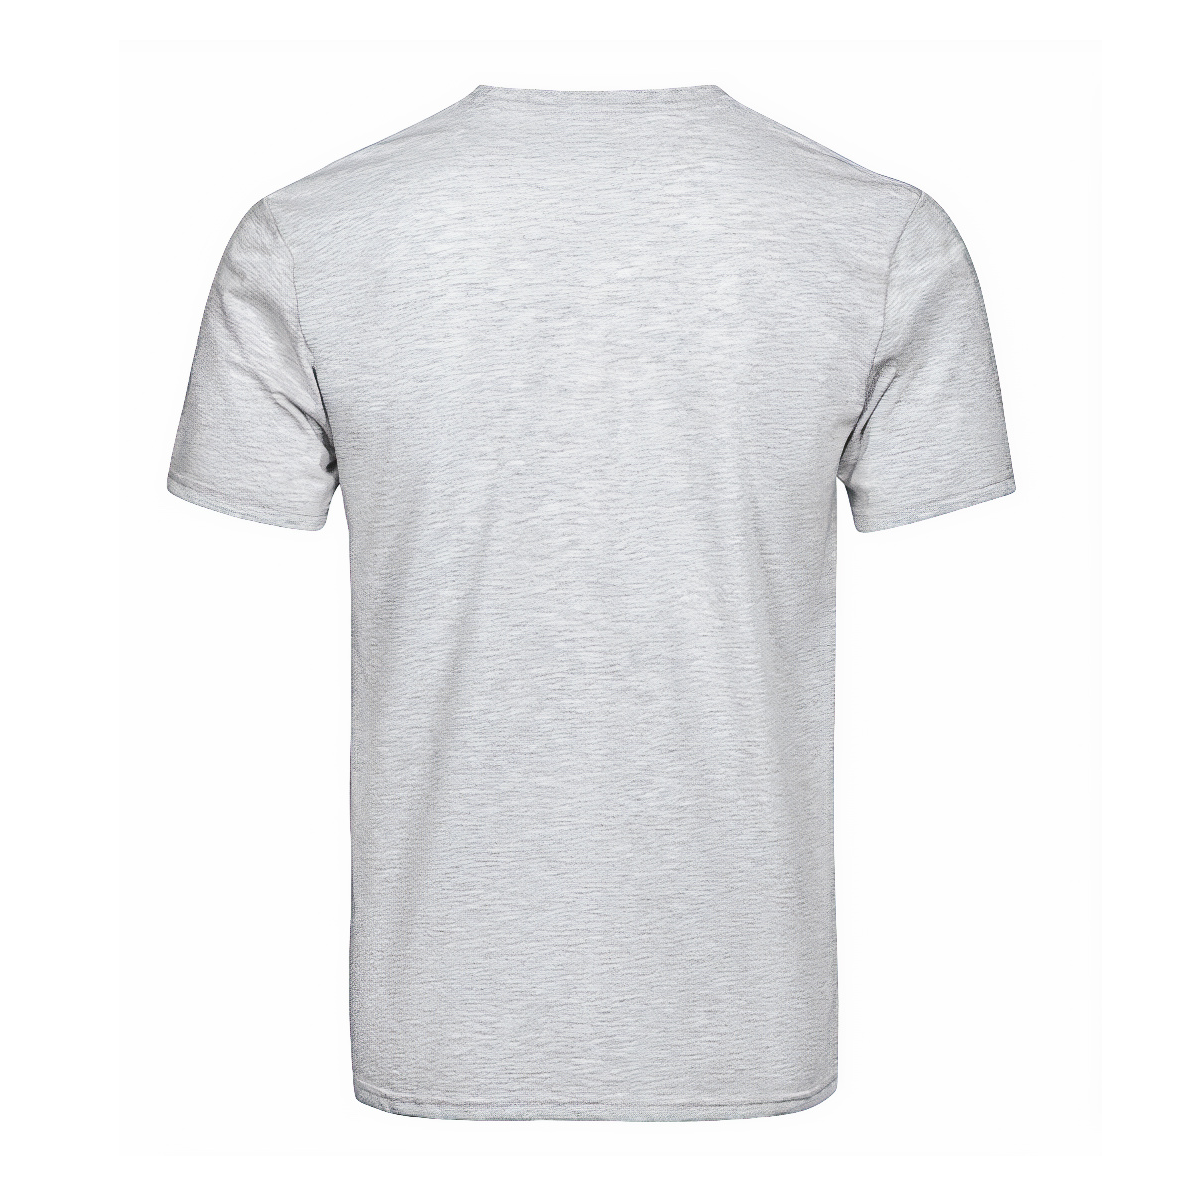 Oliphant Tartan Crest T-shirt - I'm not yelling style